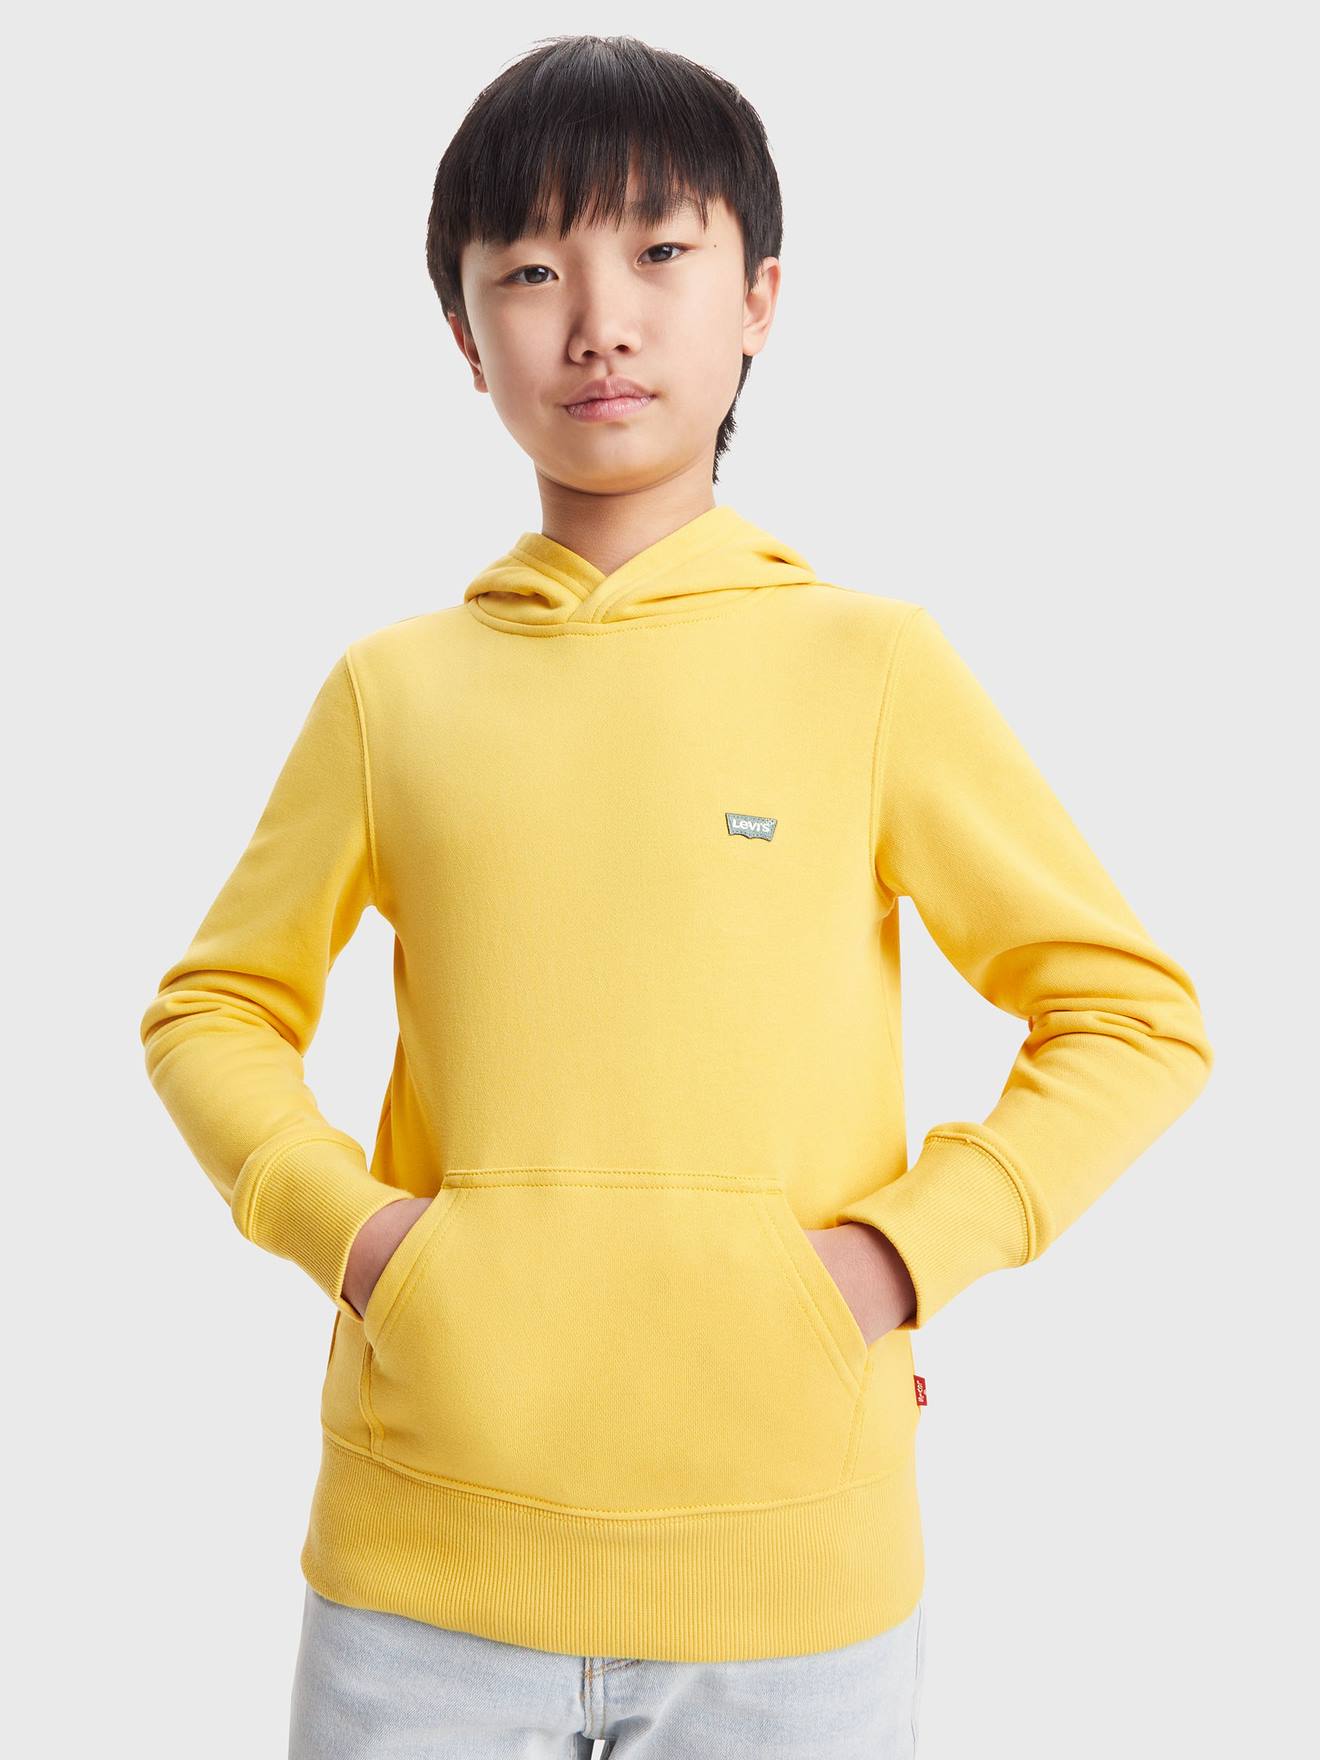 Hooded Sweatshirt for Babies, LVB Mini Batwing by Levi’s(r) mustard